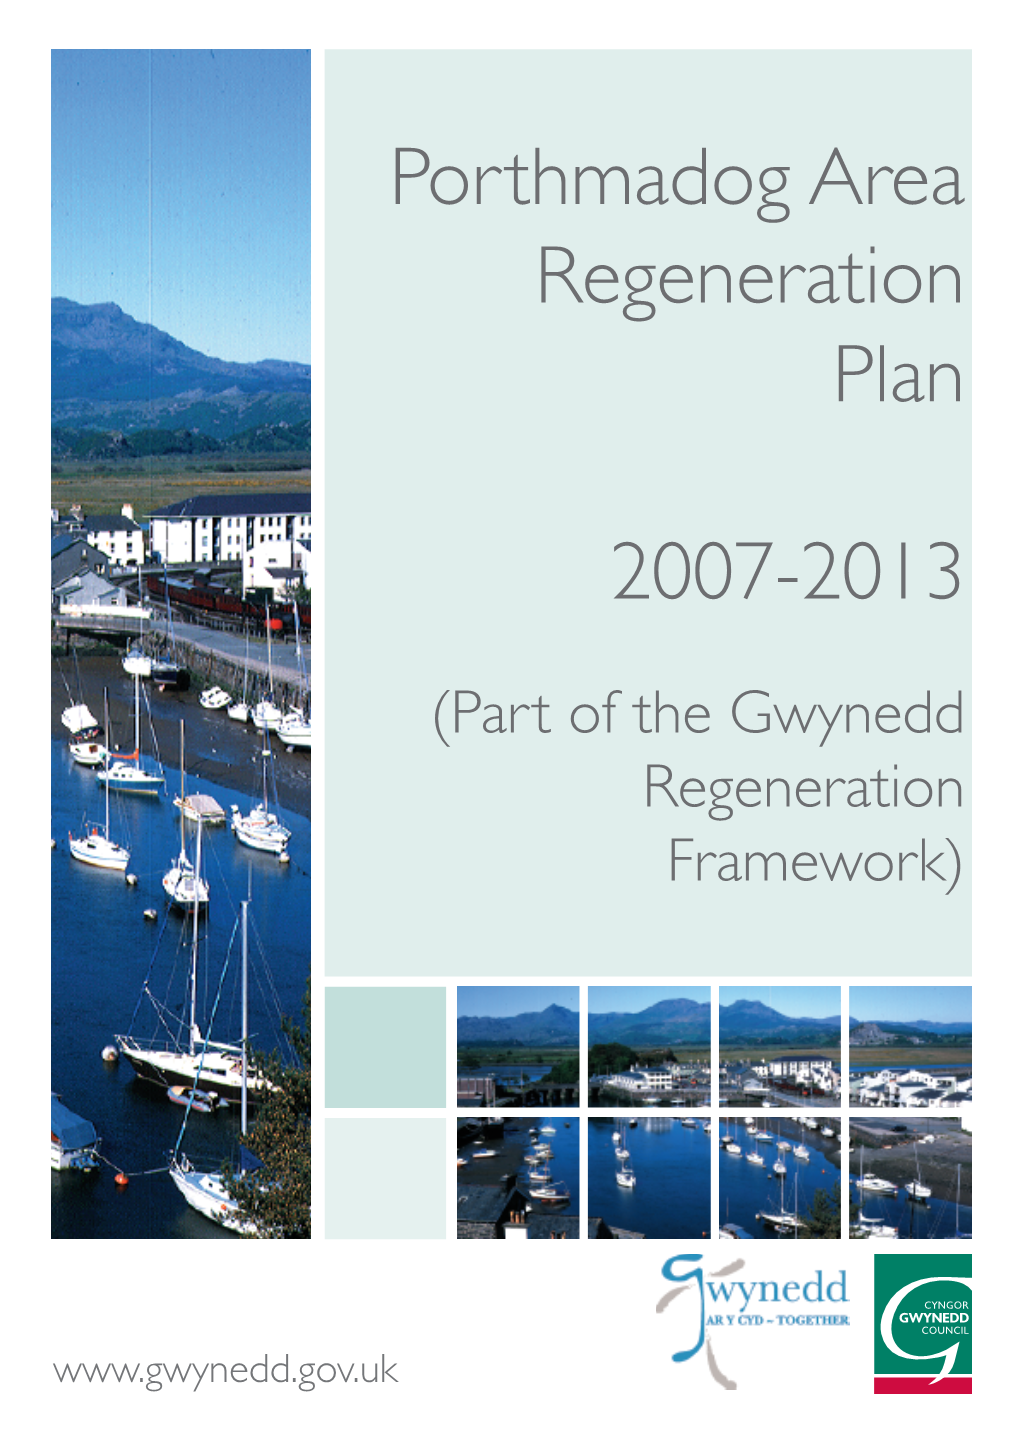 Porthmadog Area Regeneration Plan 2007-2013